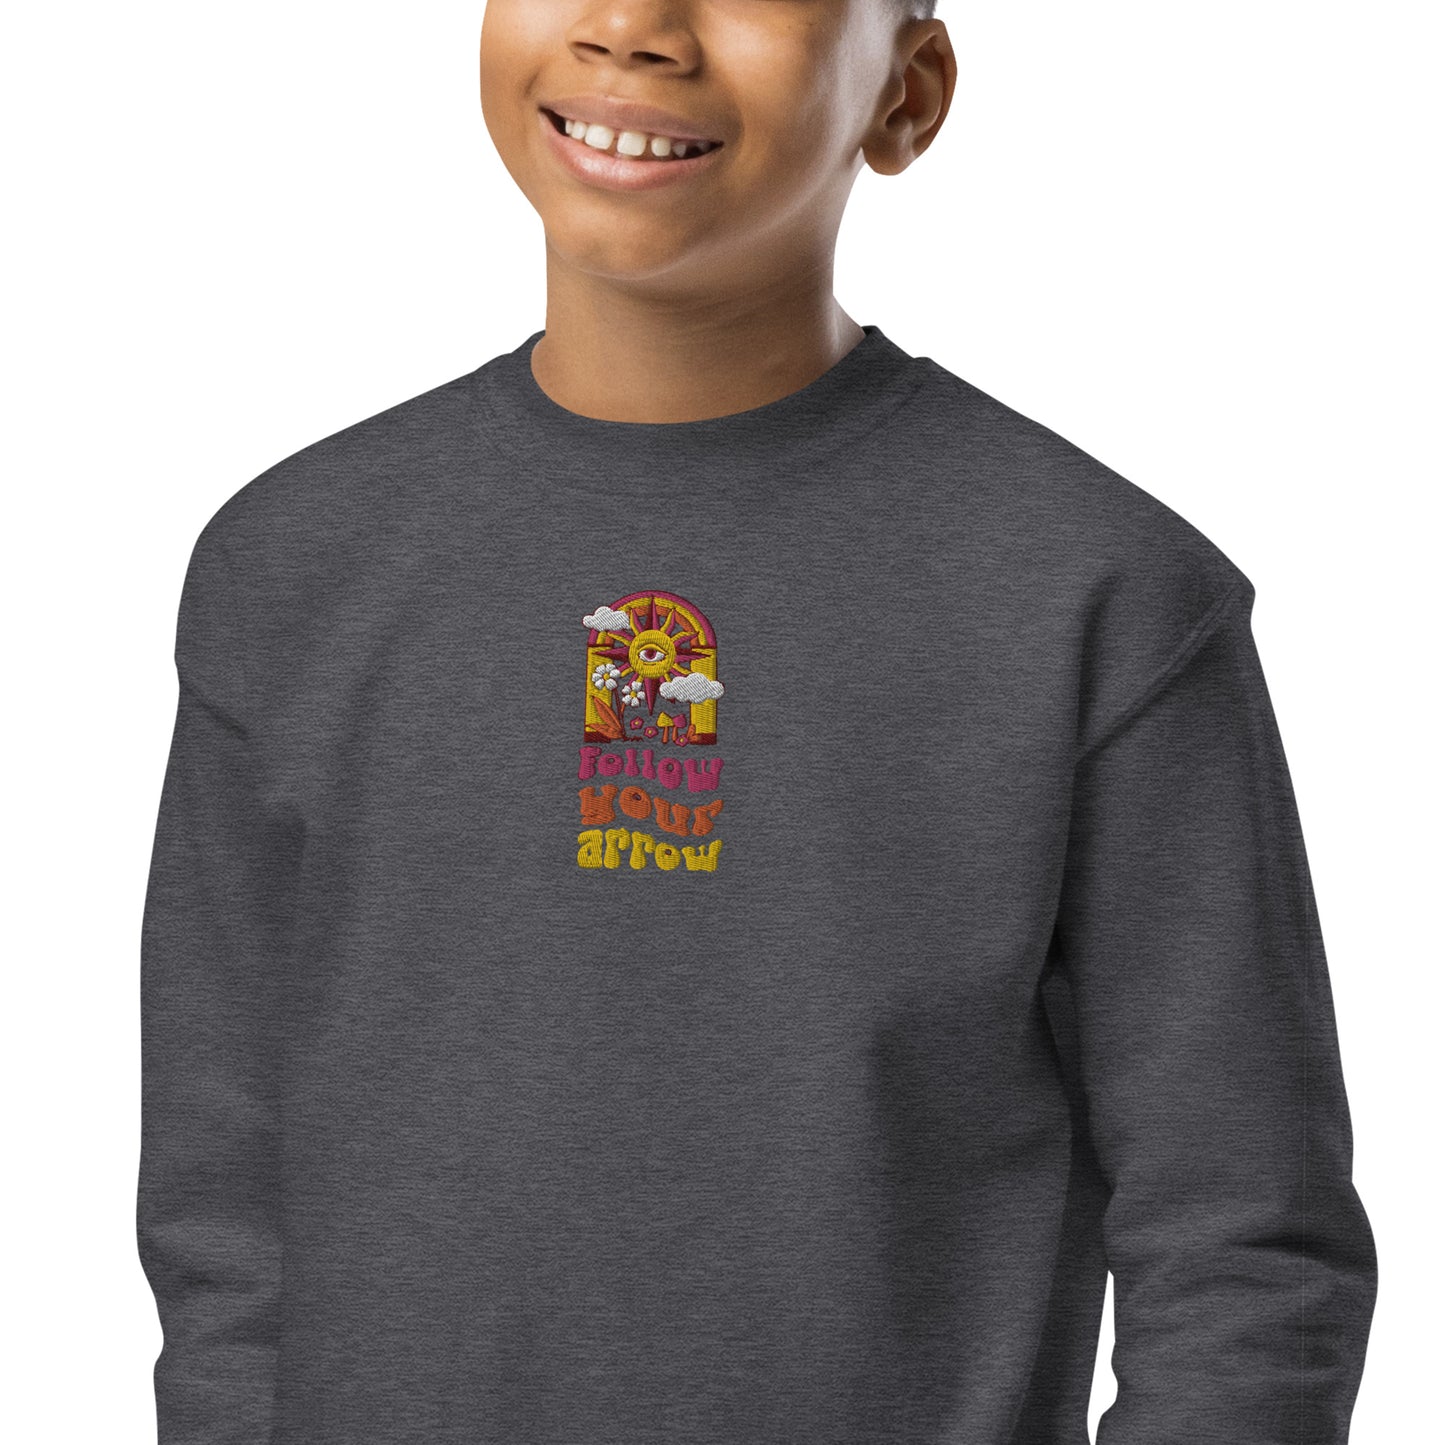 Follow Your Arrow Youth crewneck sweatshirt